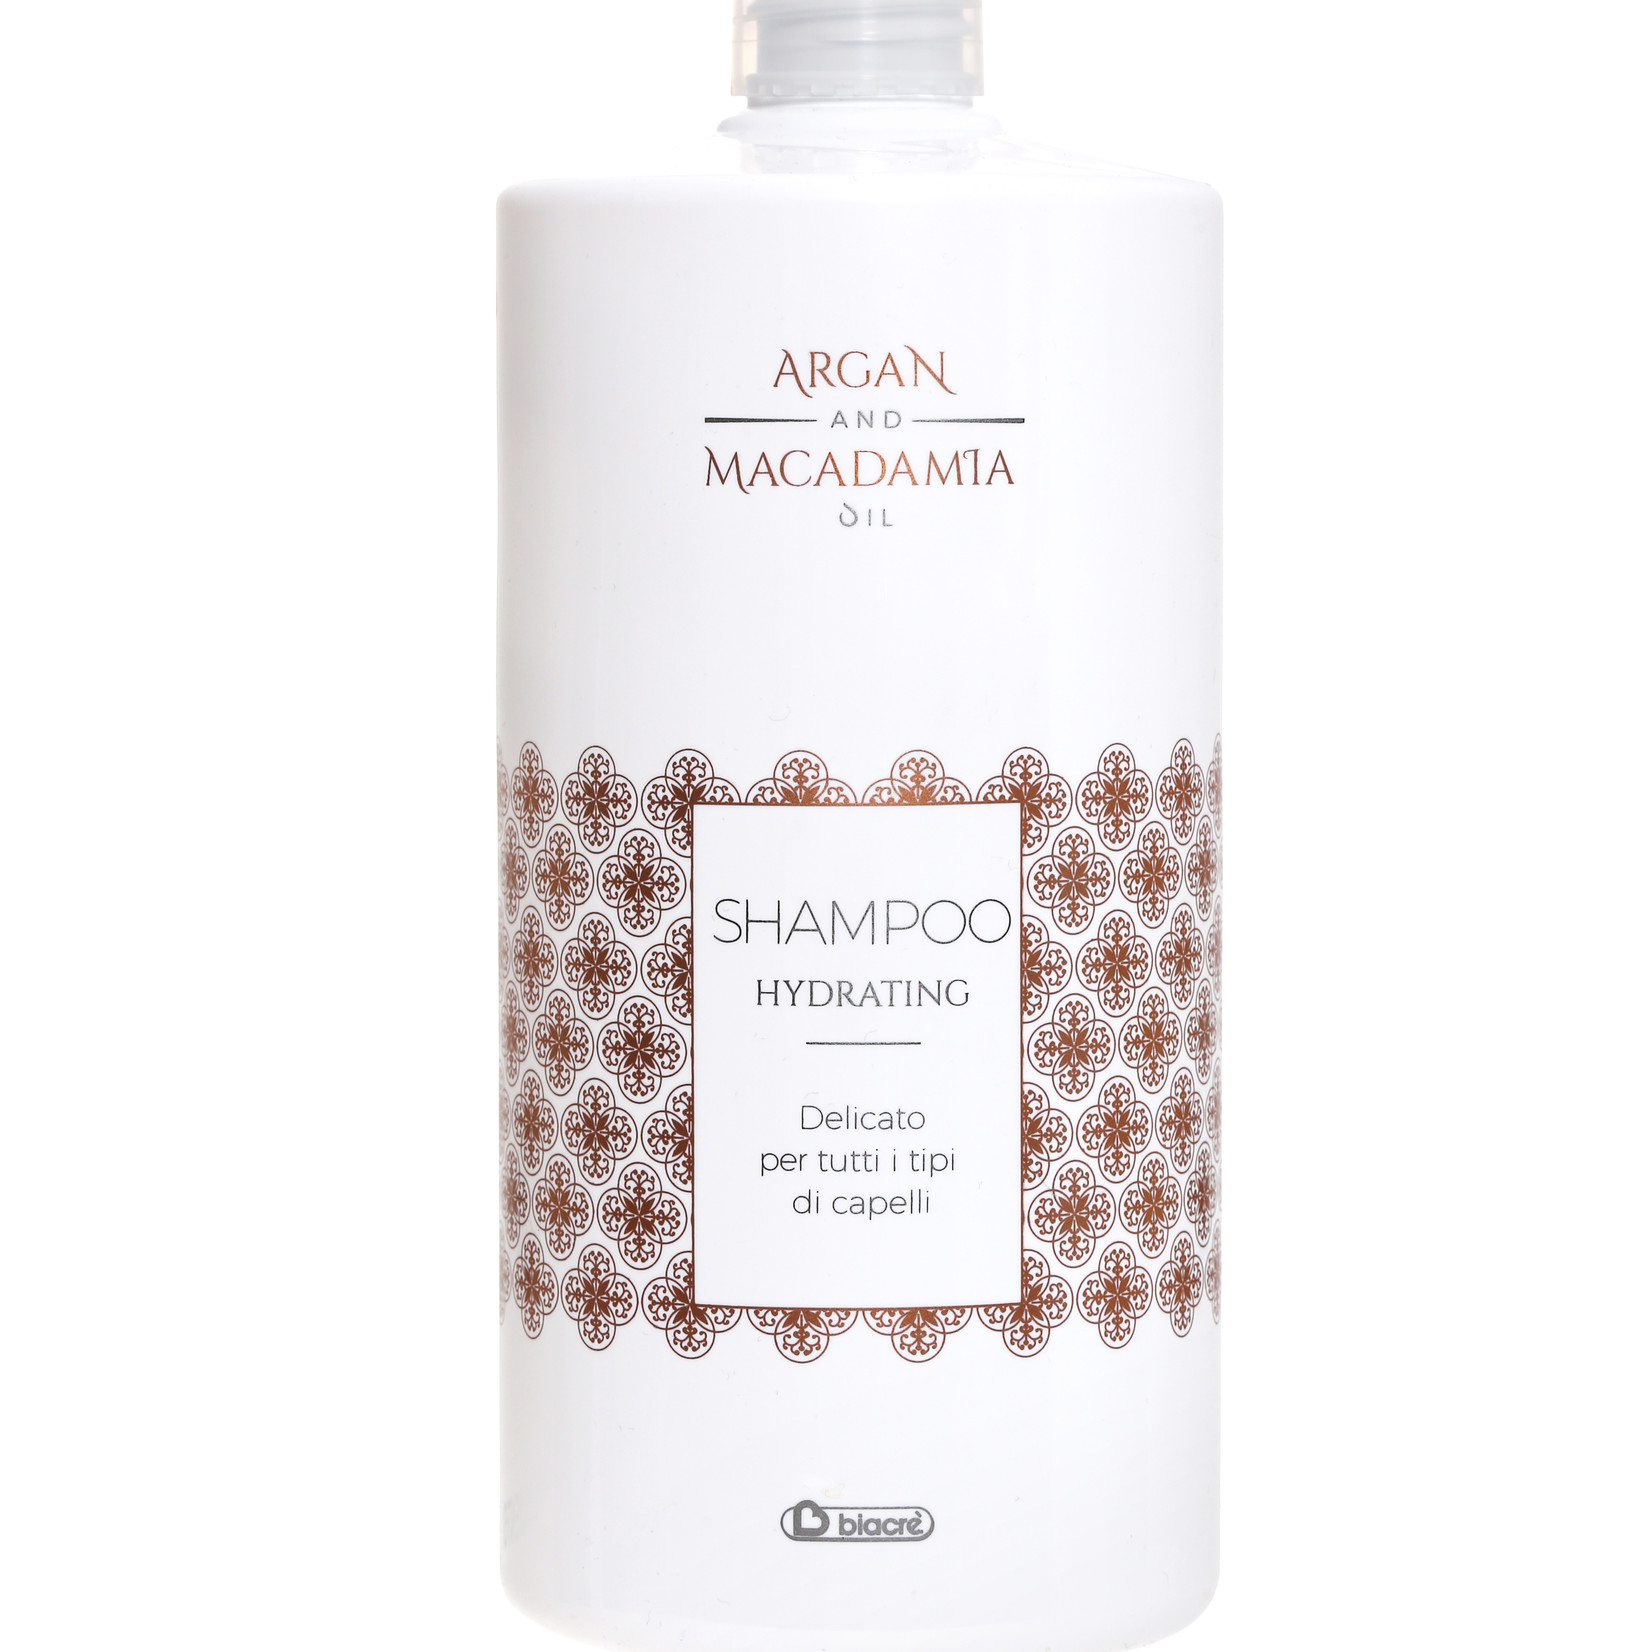 Biacre Argan & Macadamia Shampoo Hydrating 1000ml